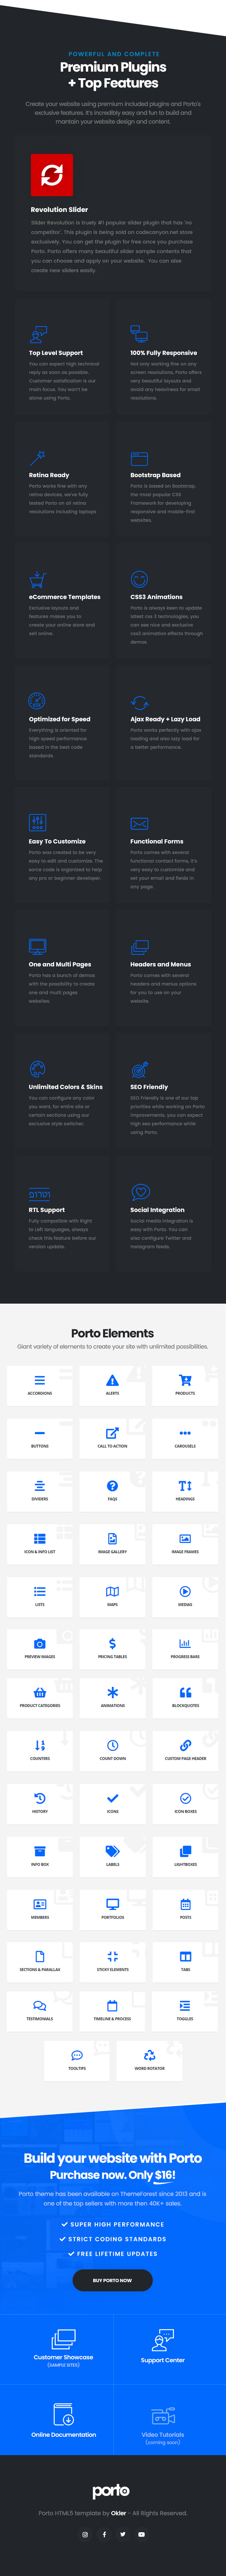 Porto - Responsive HTML5 Template - 5